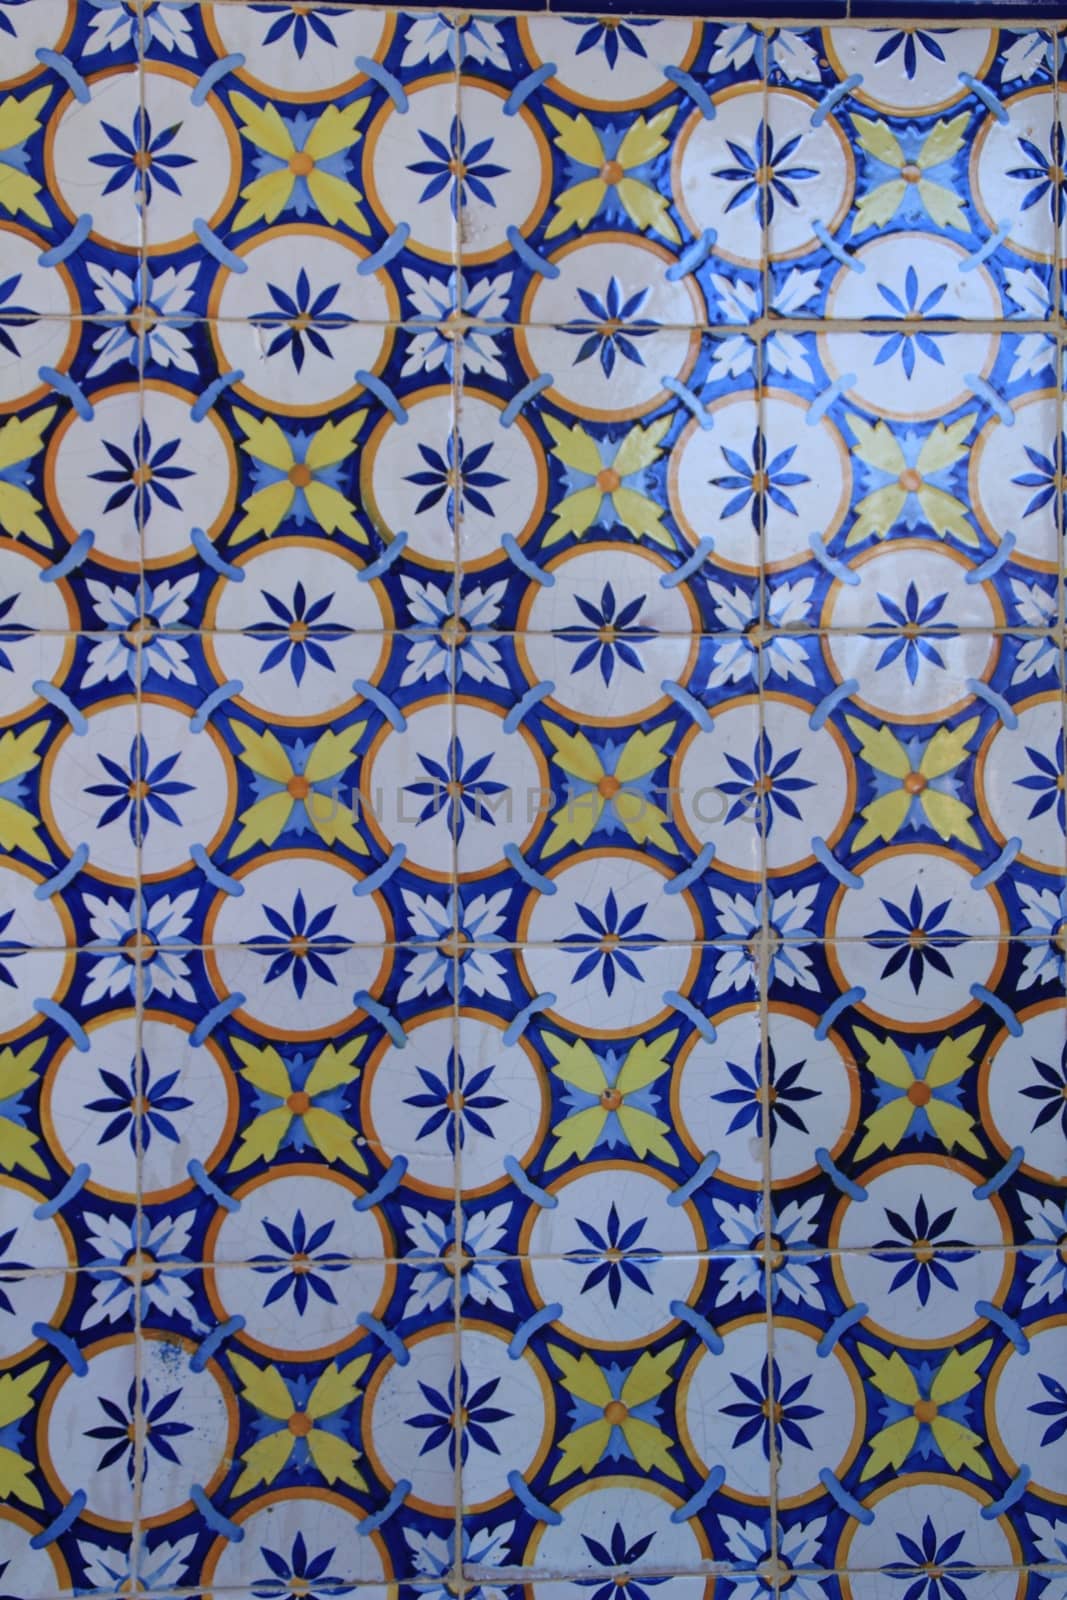 Colorful tiles of Lisbon, Portugal